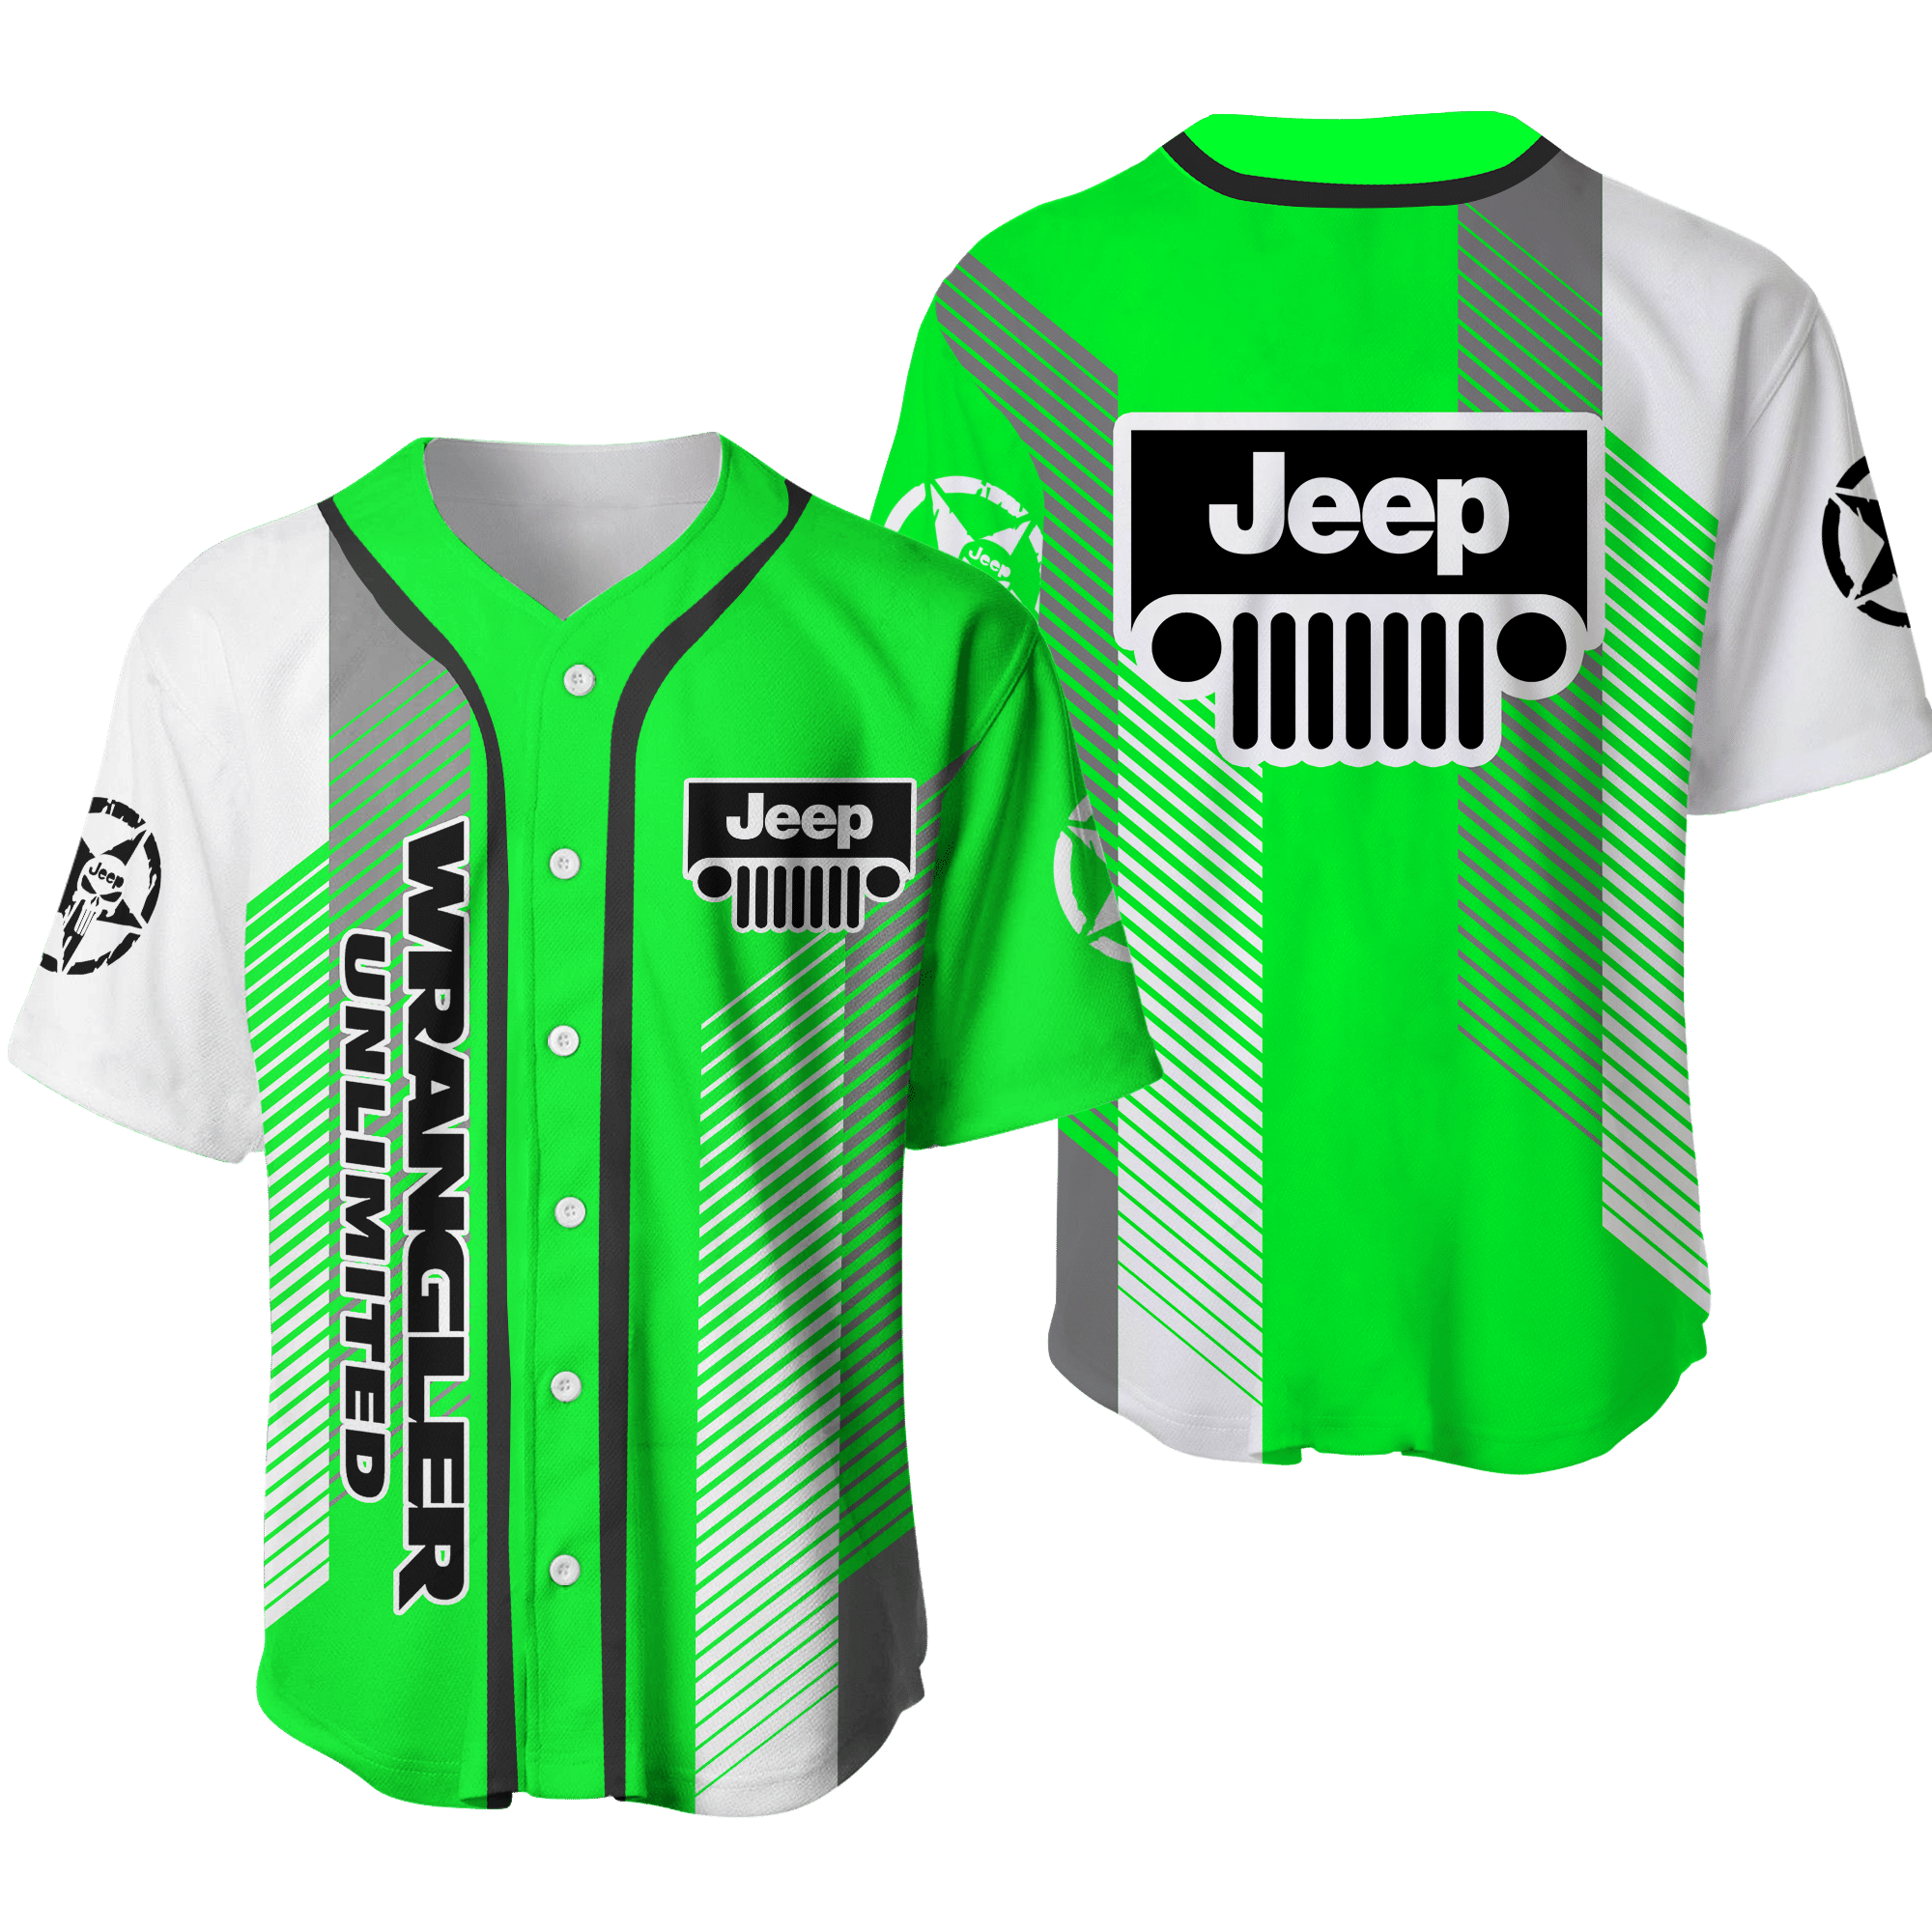 3D Printed Jeep Wrangler Dvt-Hl Men’S Round Collar T-Shirt Ver 1 (Neon)